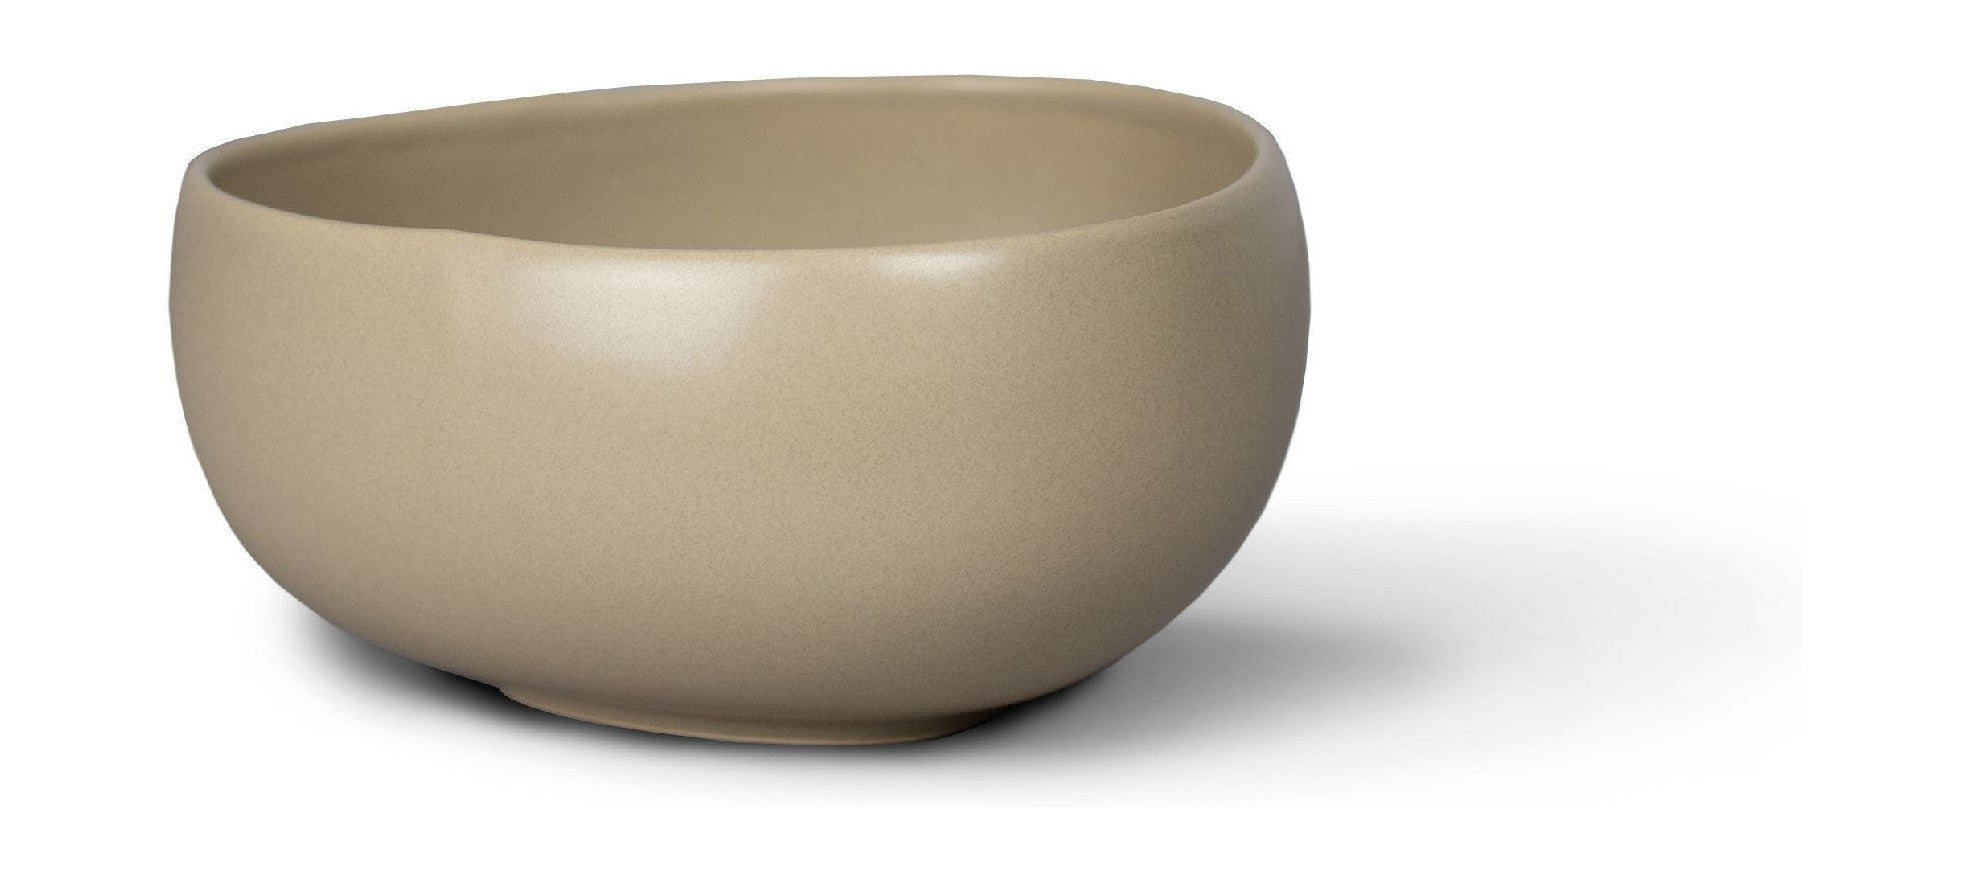 RO Collection Signature Bowl Medium, Myk sand